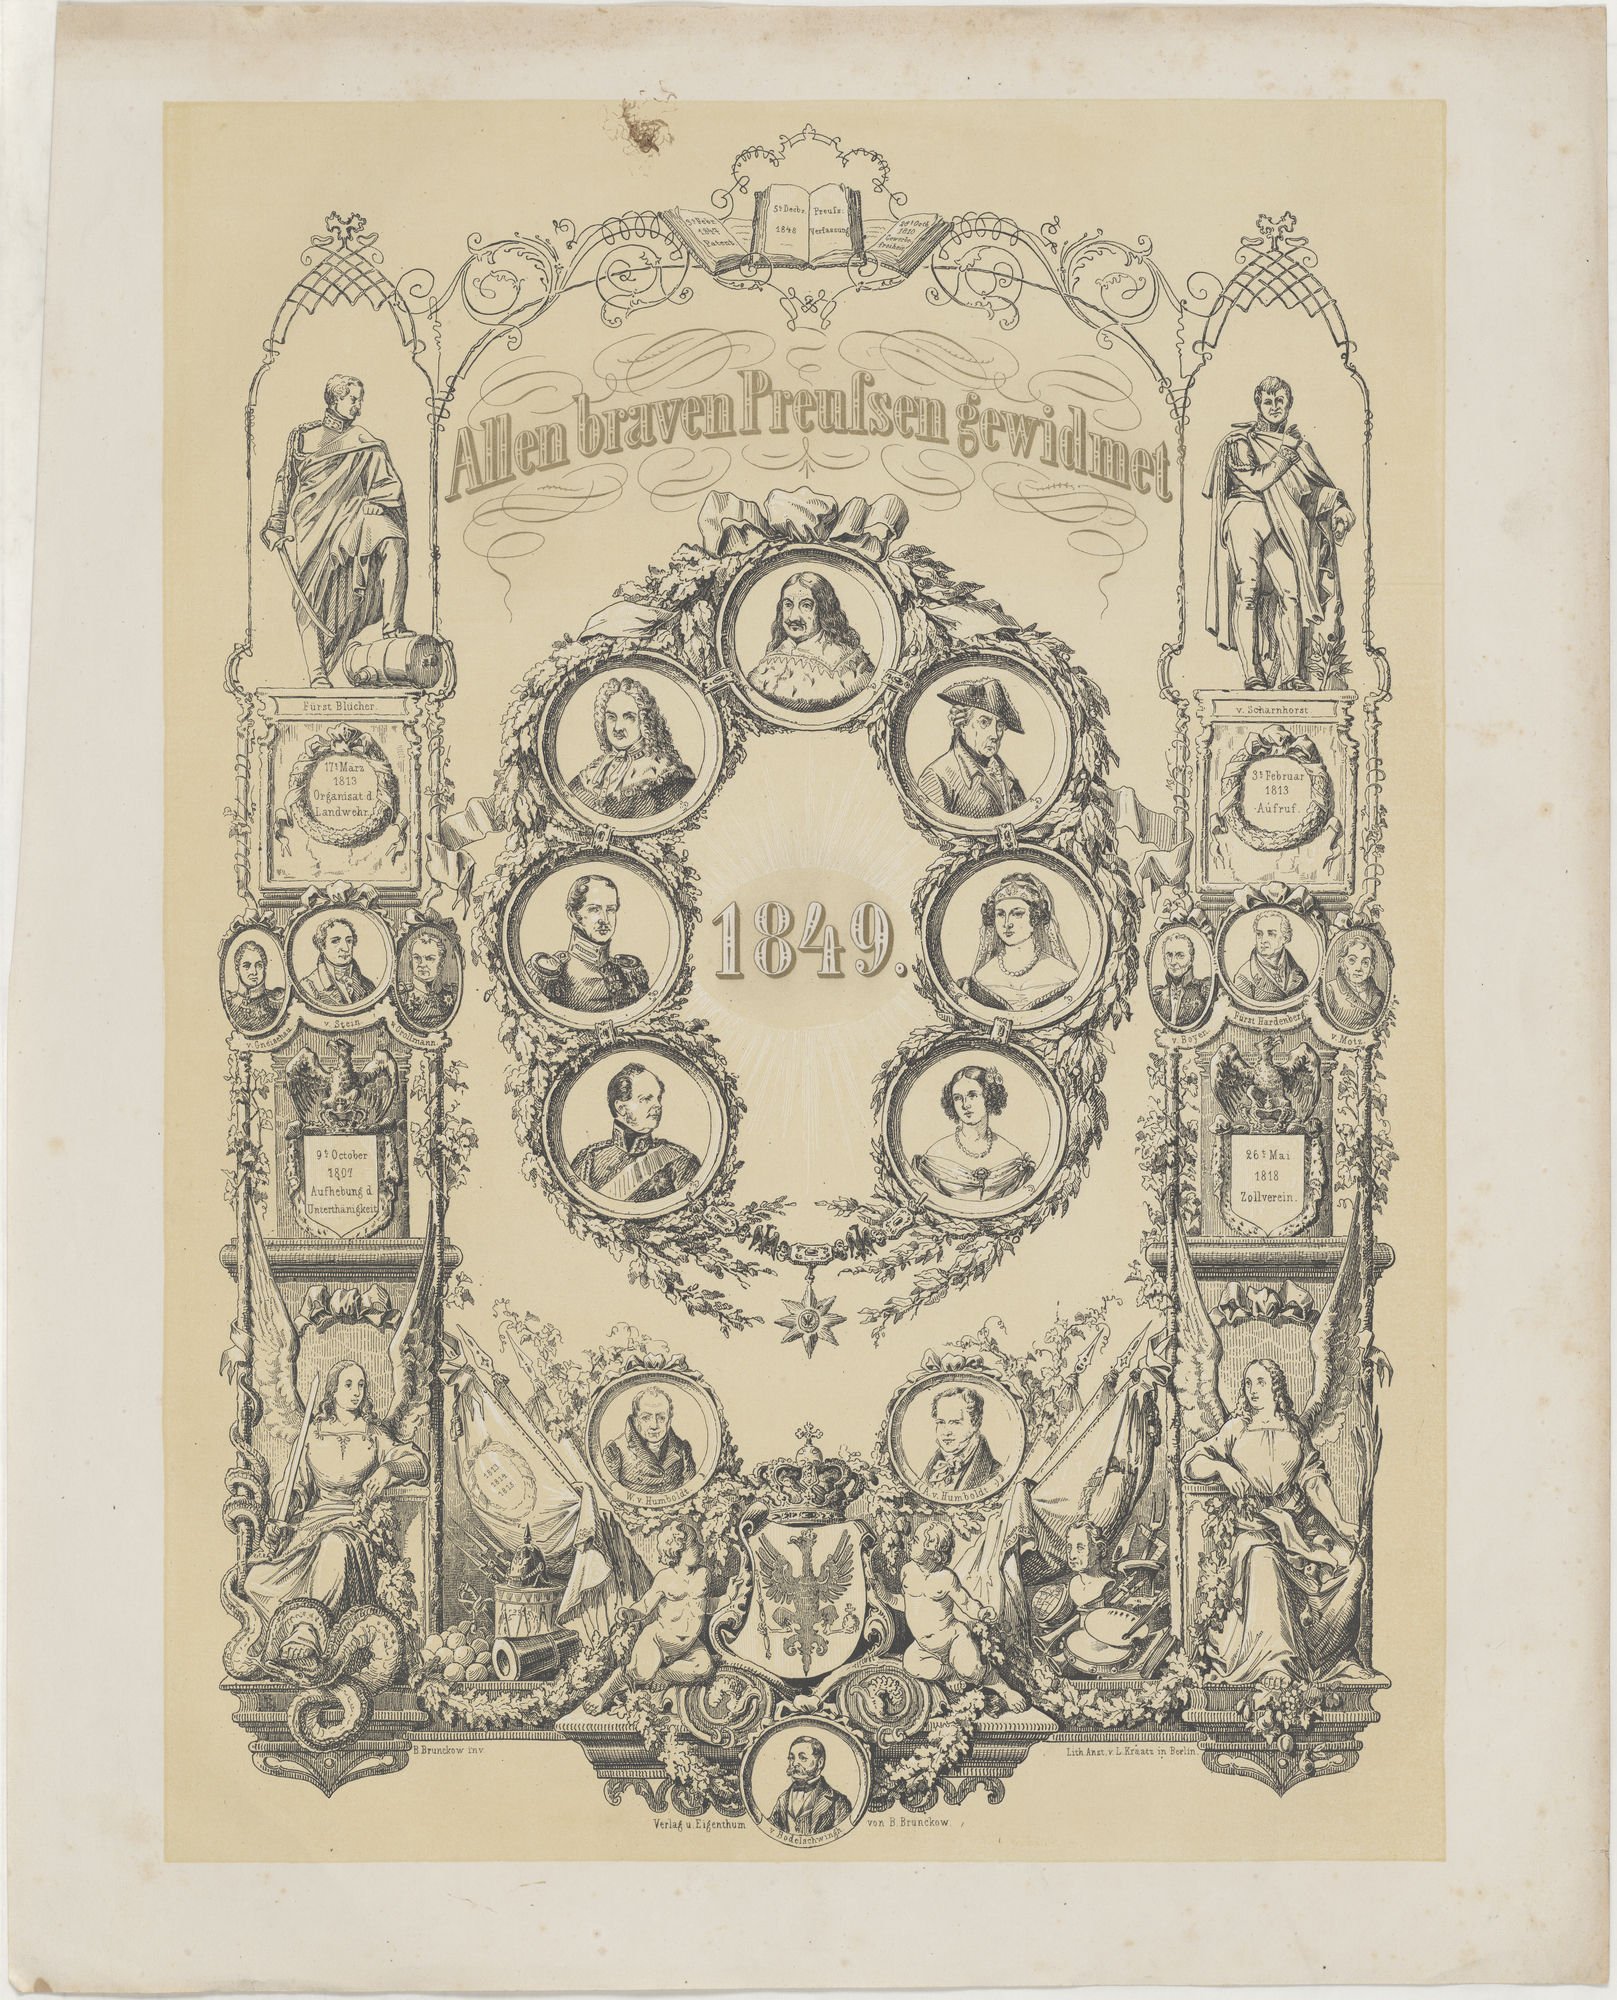 Allen braven Peussen gewidmet/ 1849 (Kulturstiftung Sachsen-Anhalt Public Domain Mark)